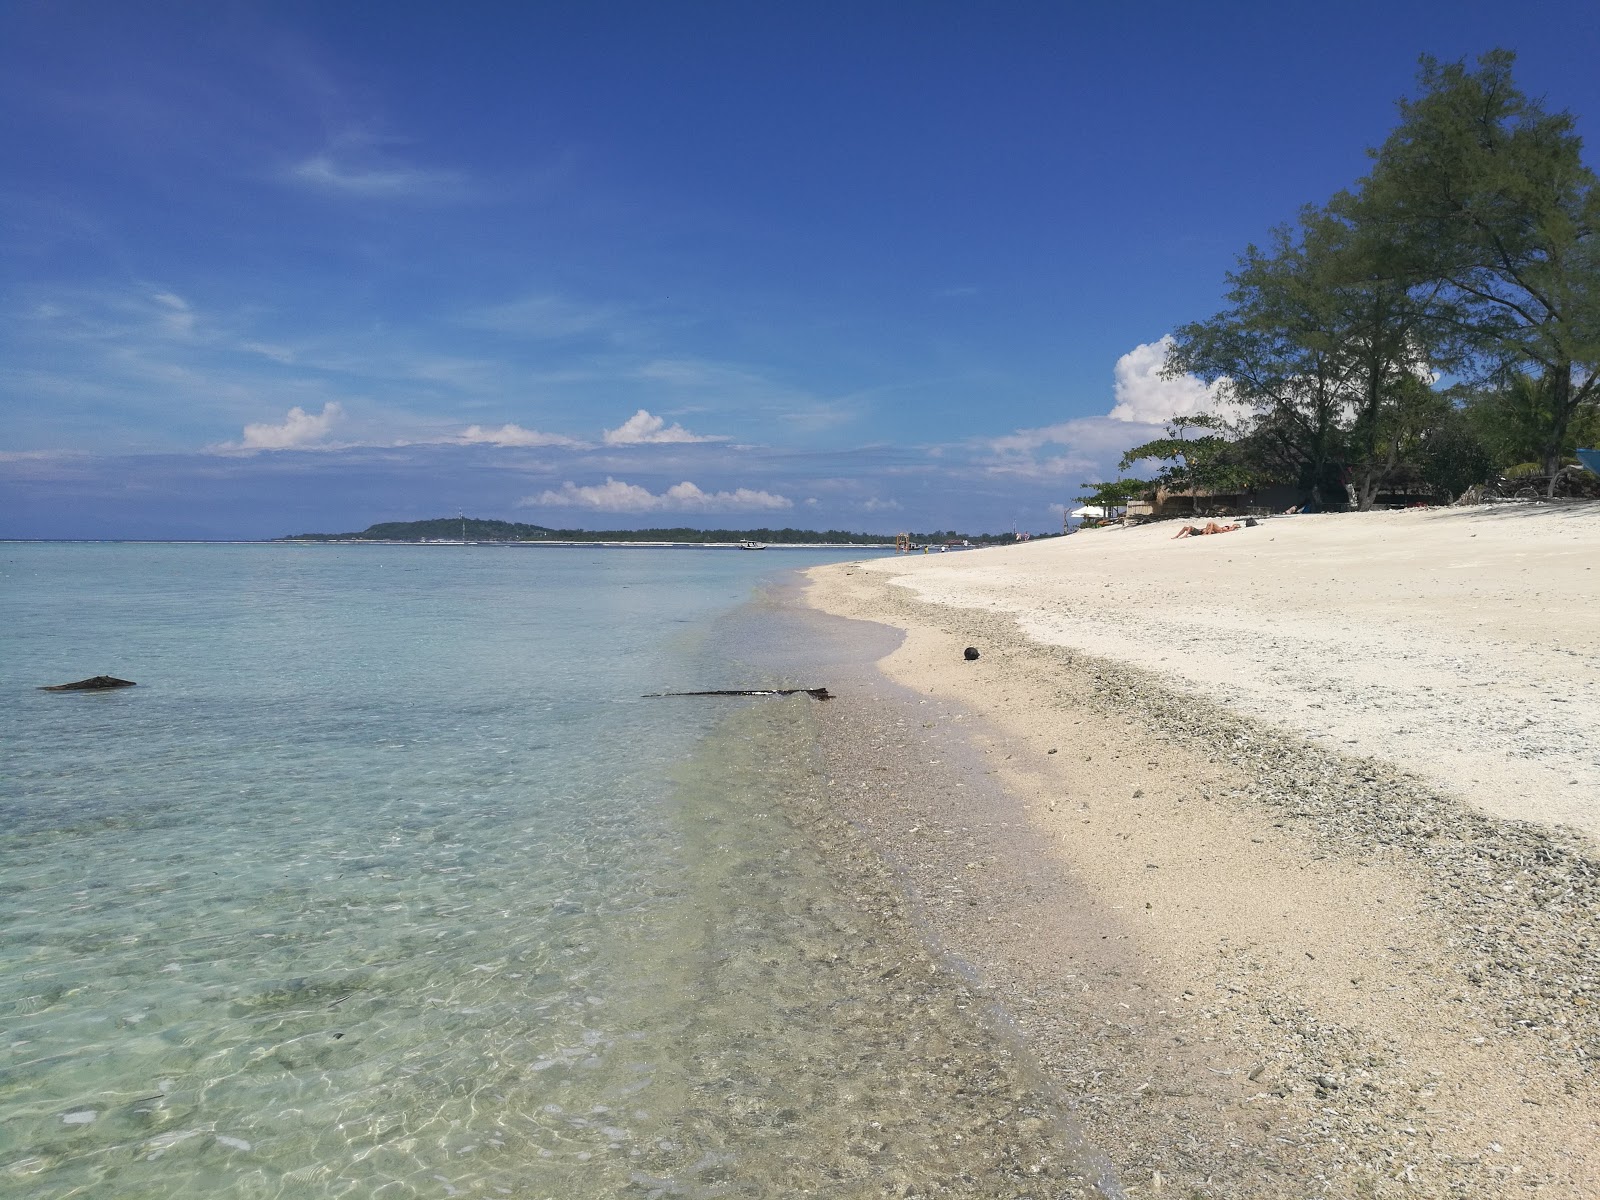 Fotografie cu Gili Air Lumbung Beach - locul popular printre cunoscătorii de relaxare